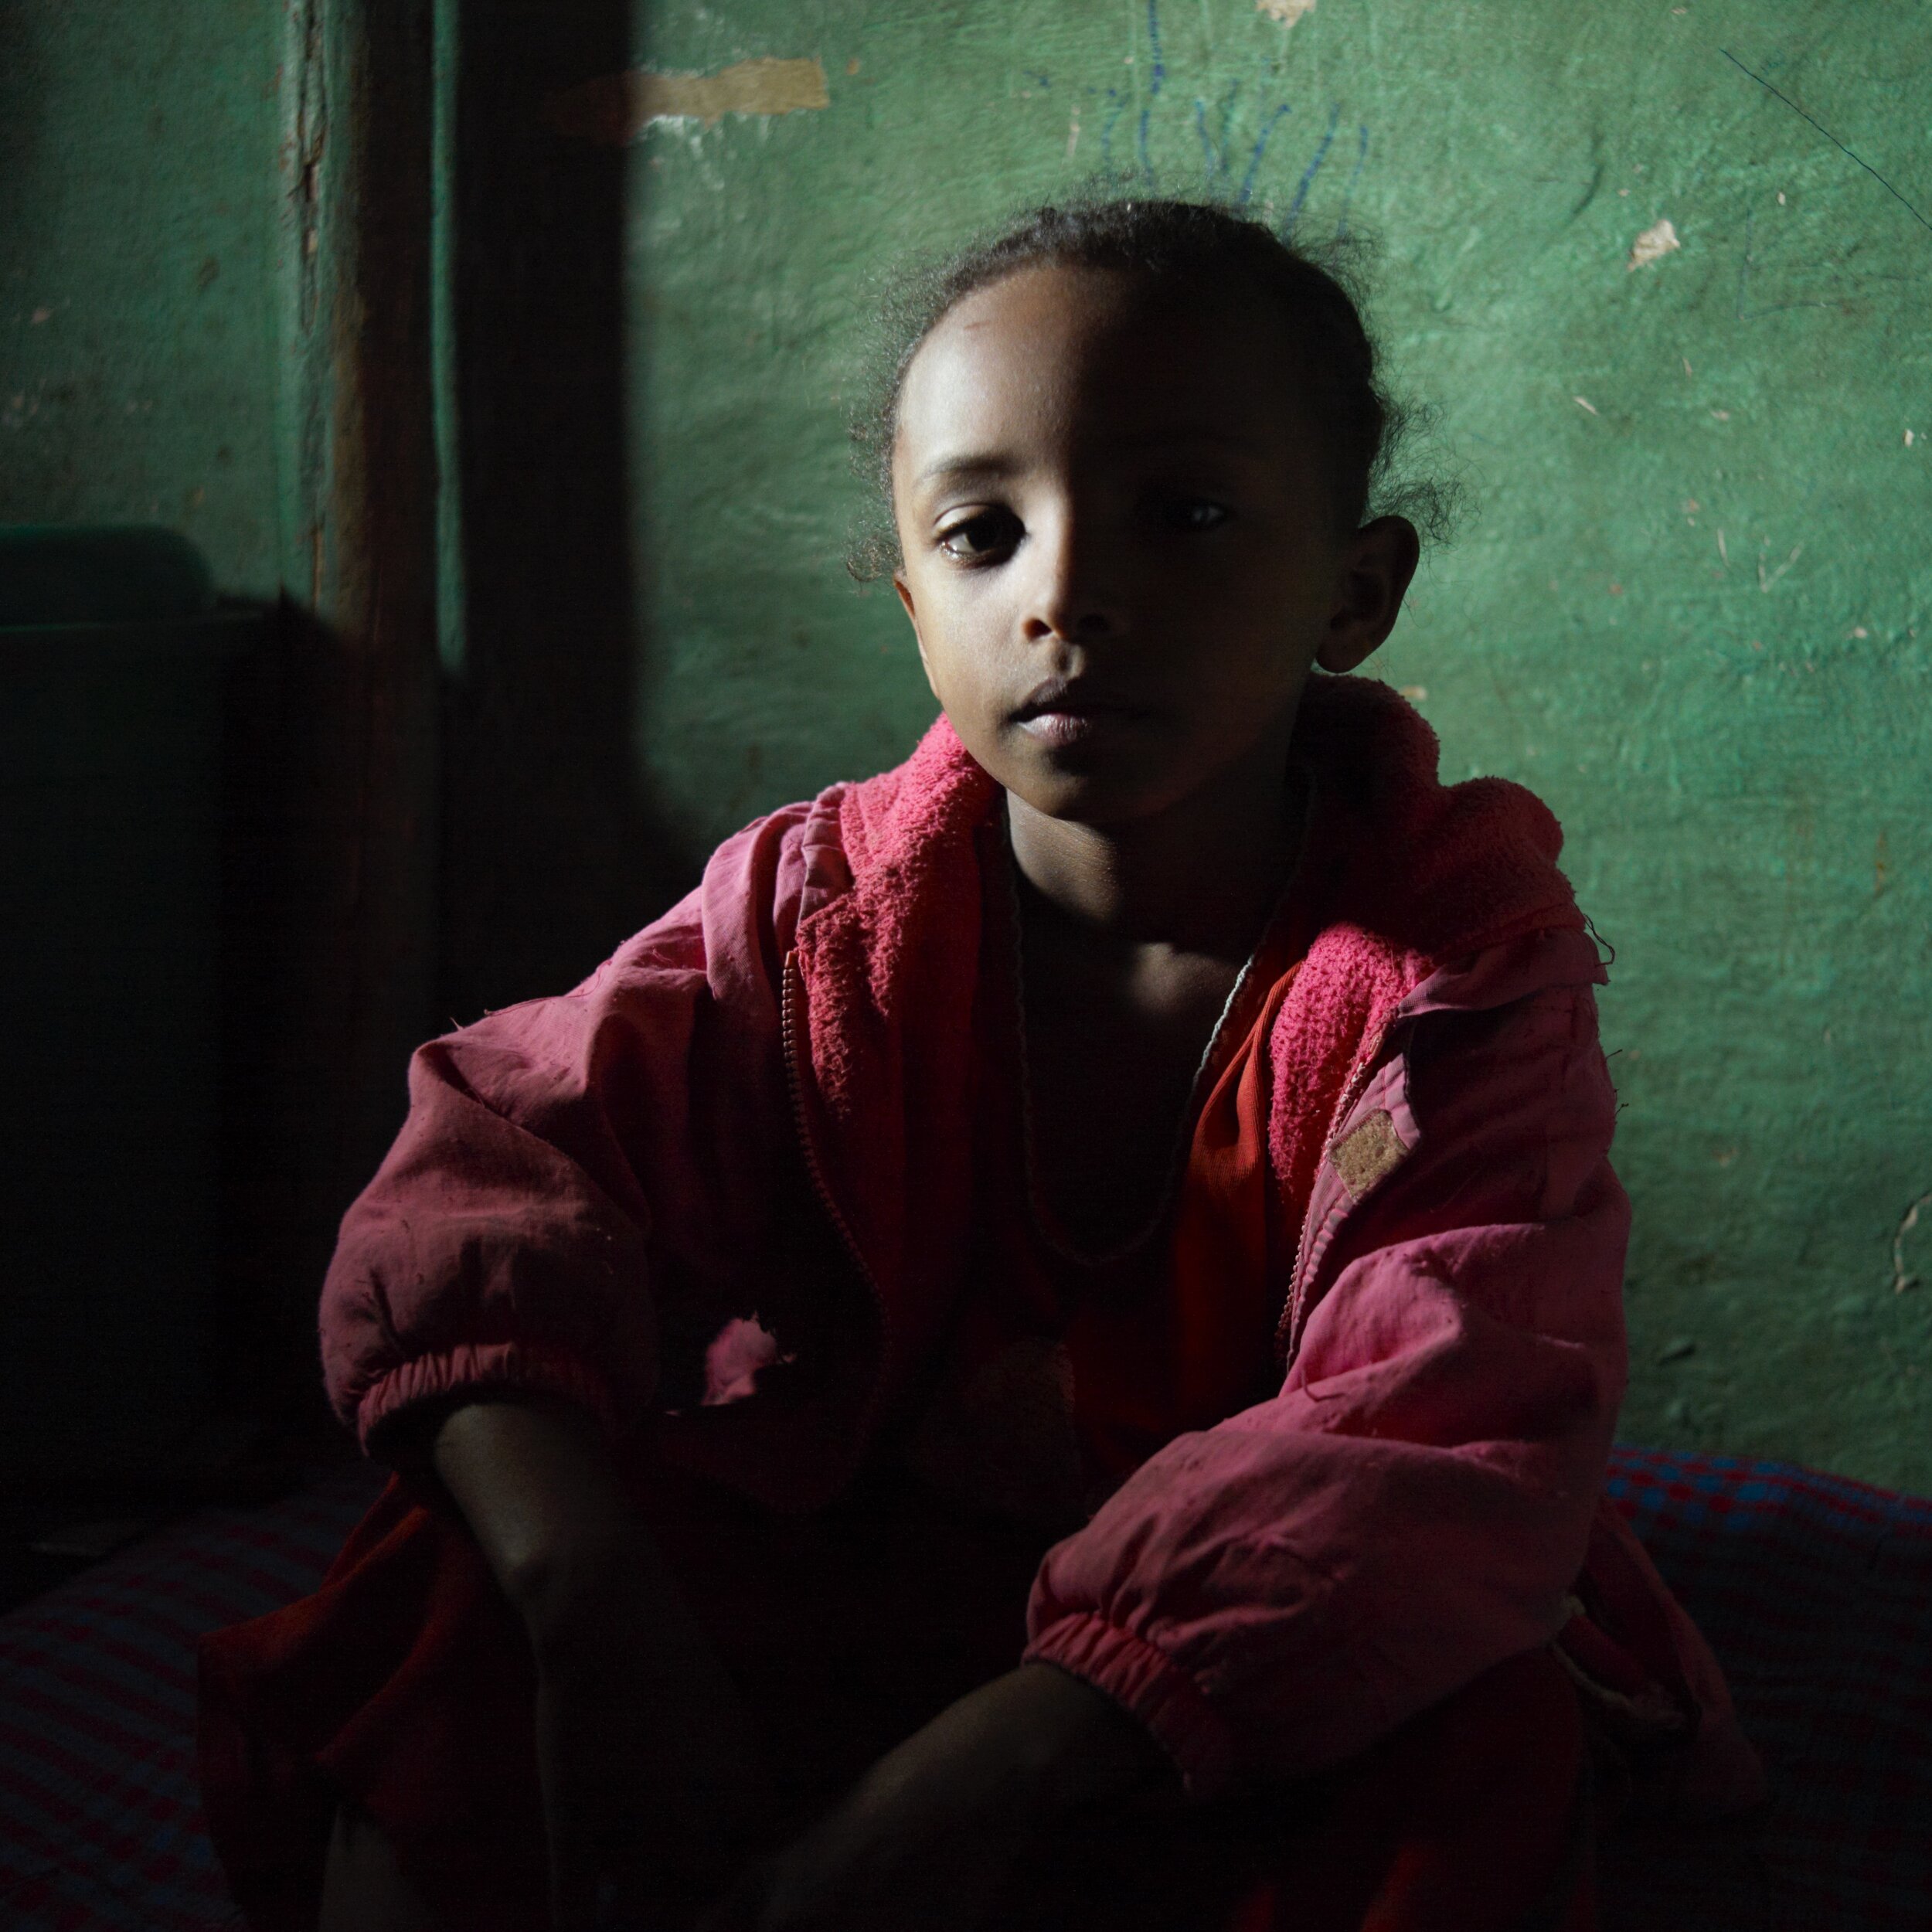 Ethiopia_maternal_mortality _014.jpg